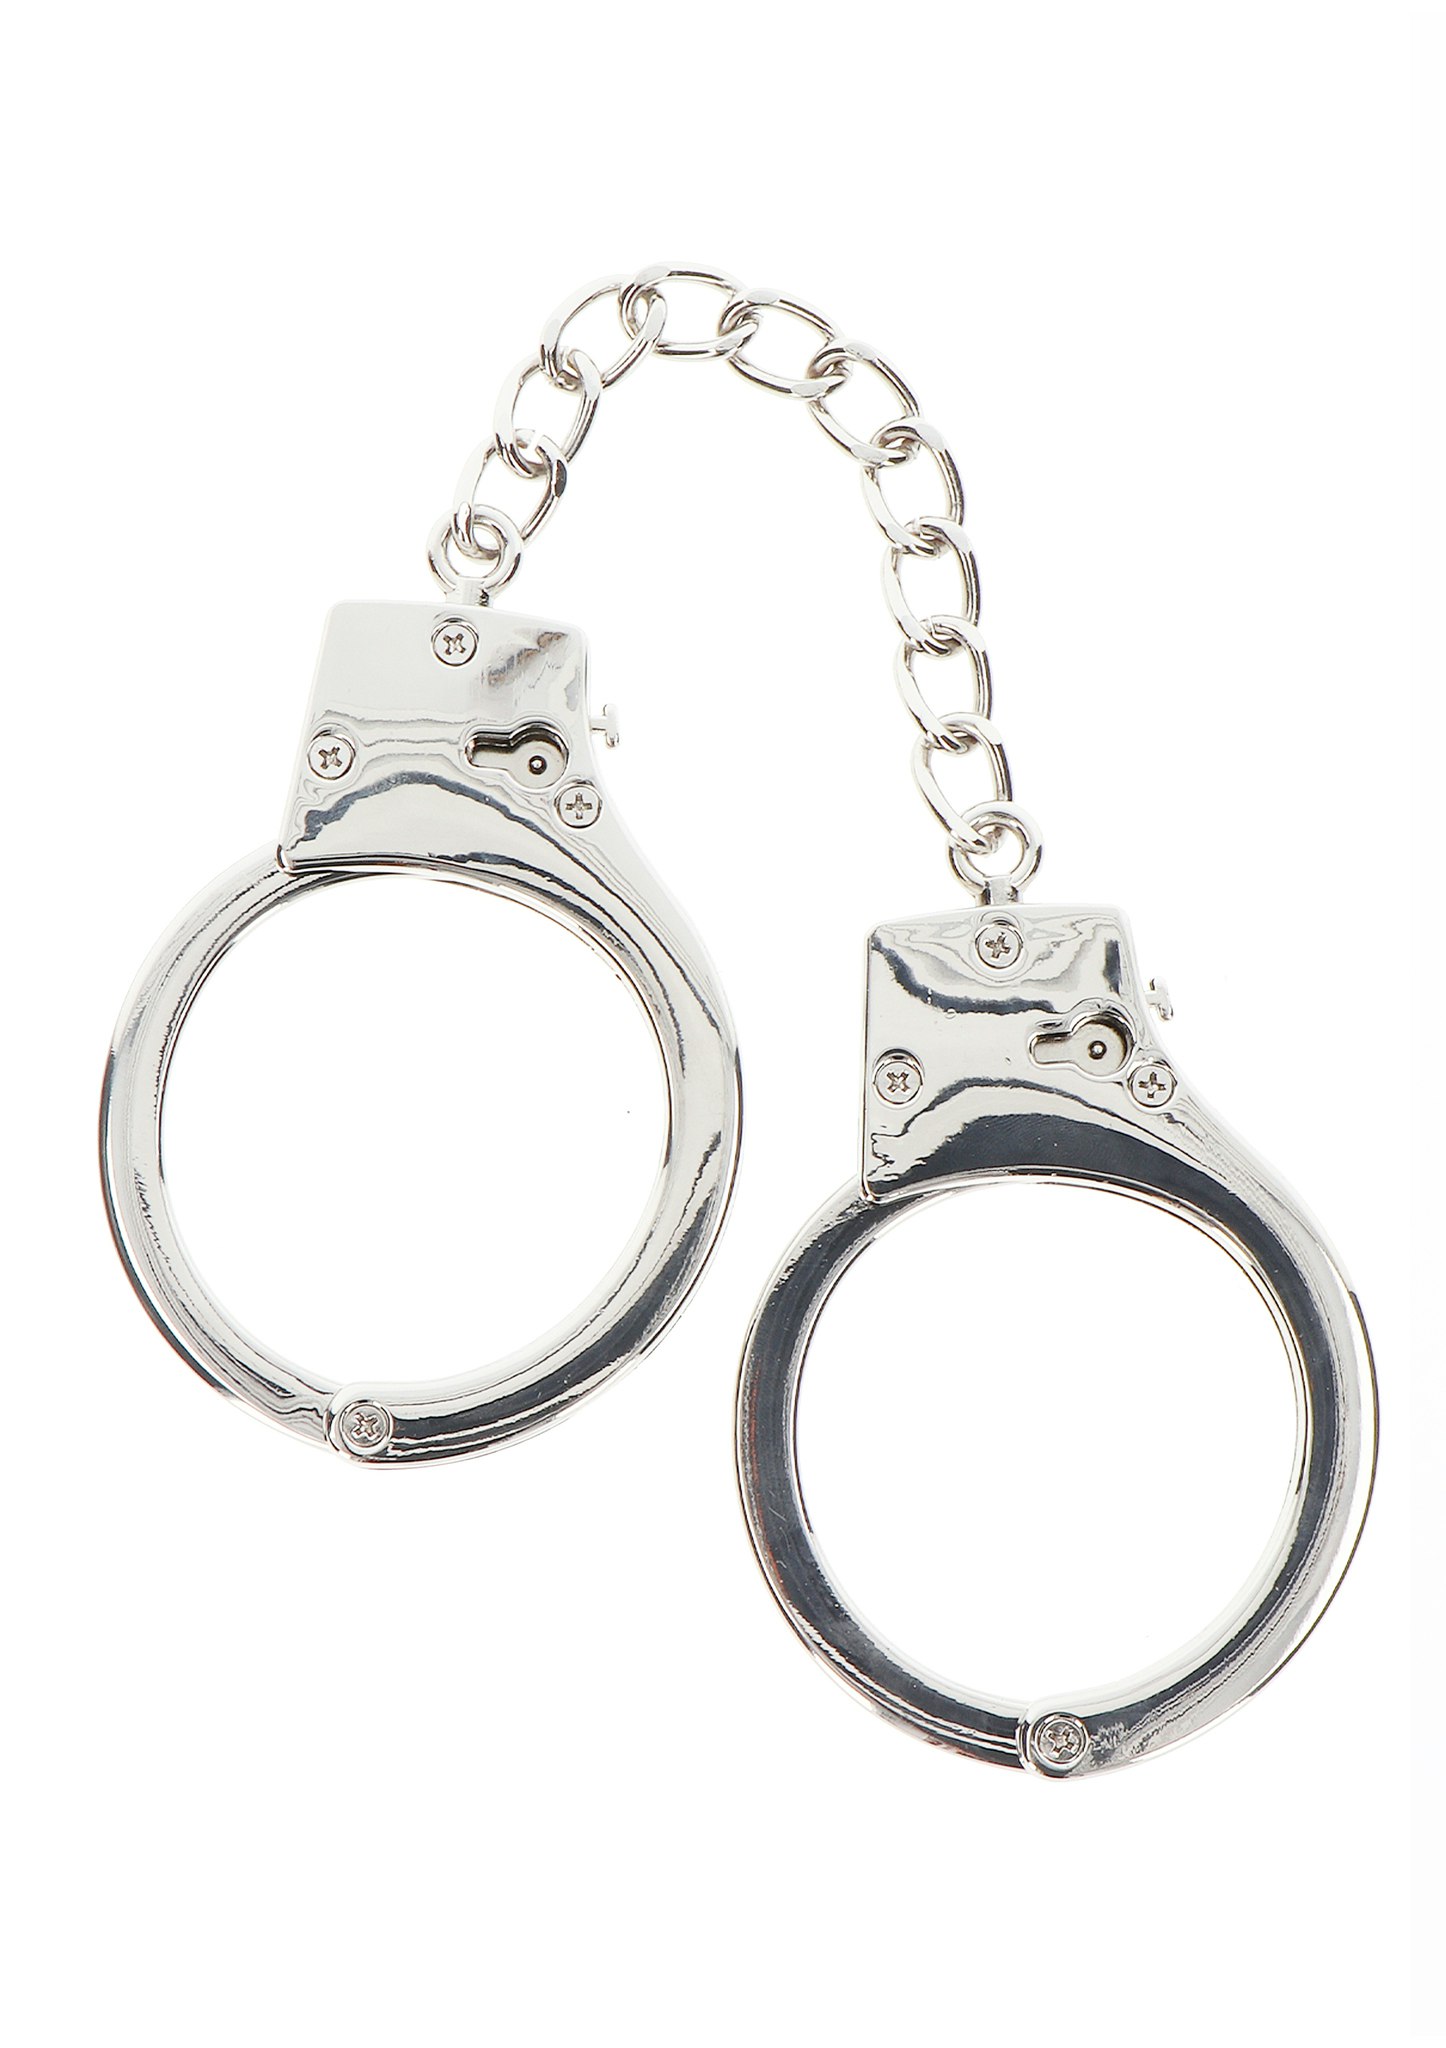 TABOOM - Silver Plated BDSM Handcuffs